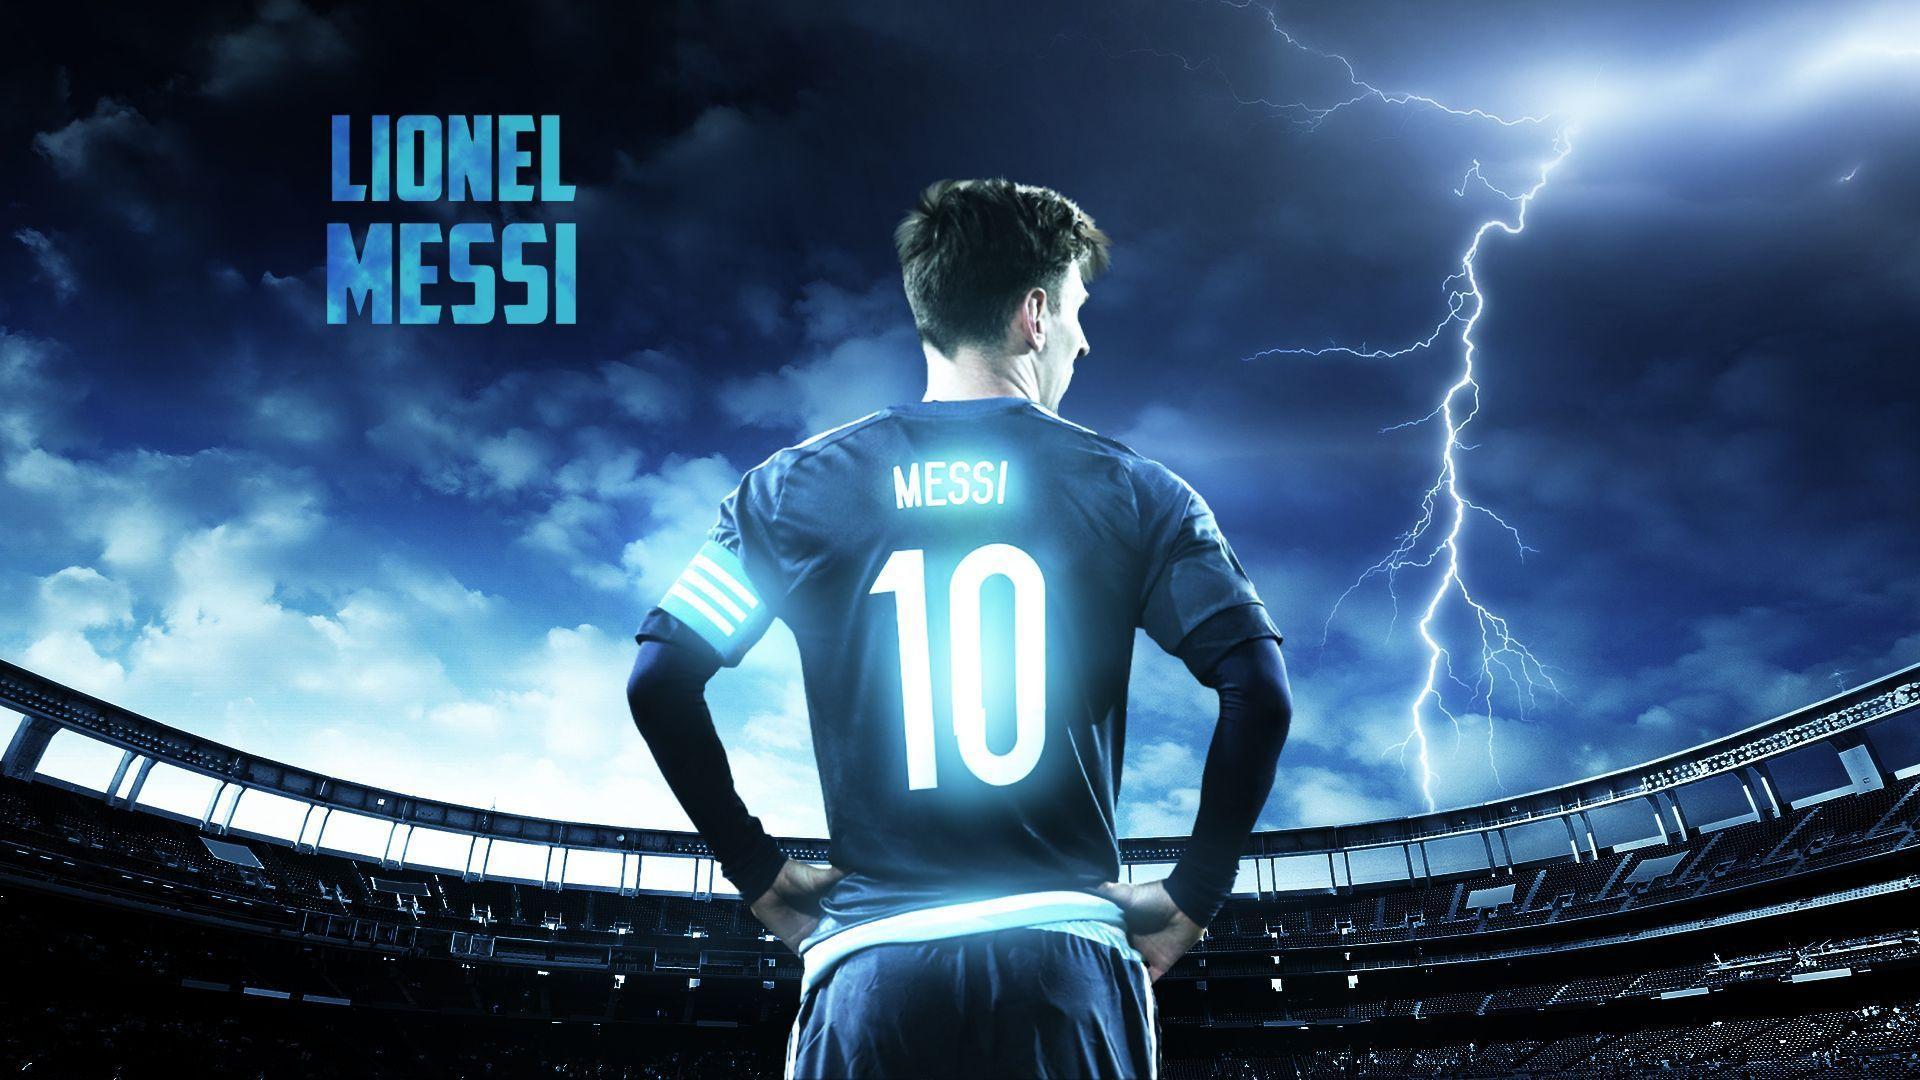 Messi Wallpaper. Funniest Messi Wallpaper, Messi Wallpaper and Messi Celebration Wallpaper